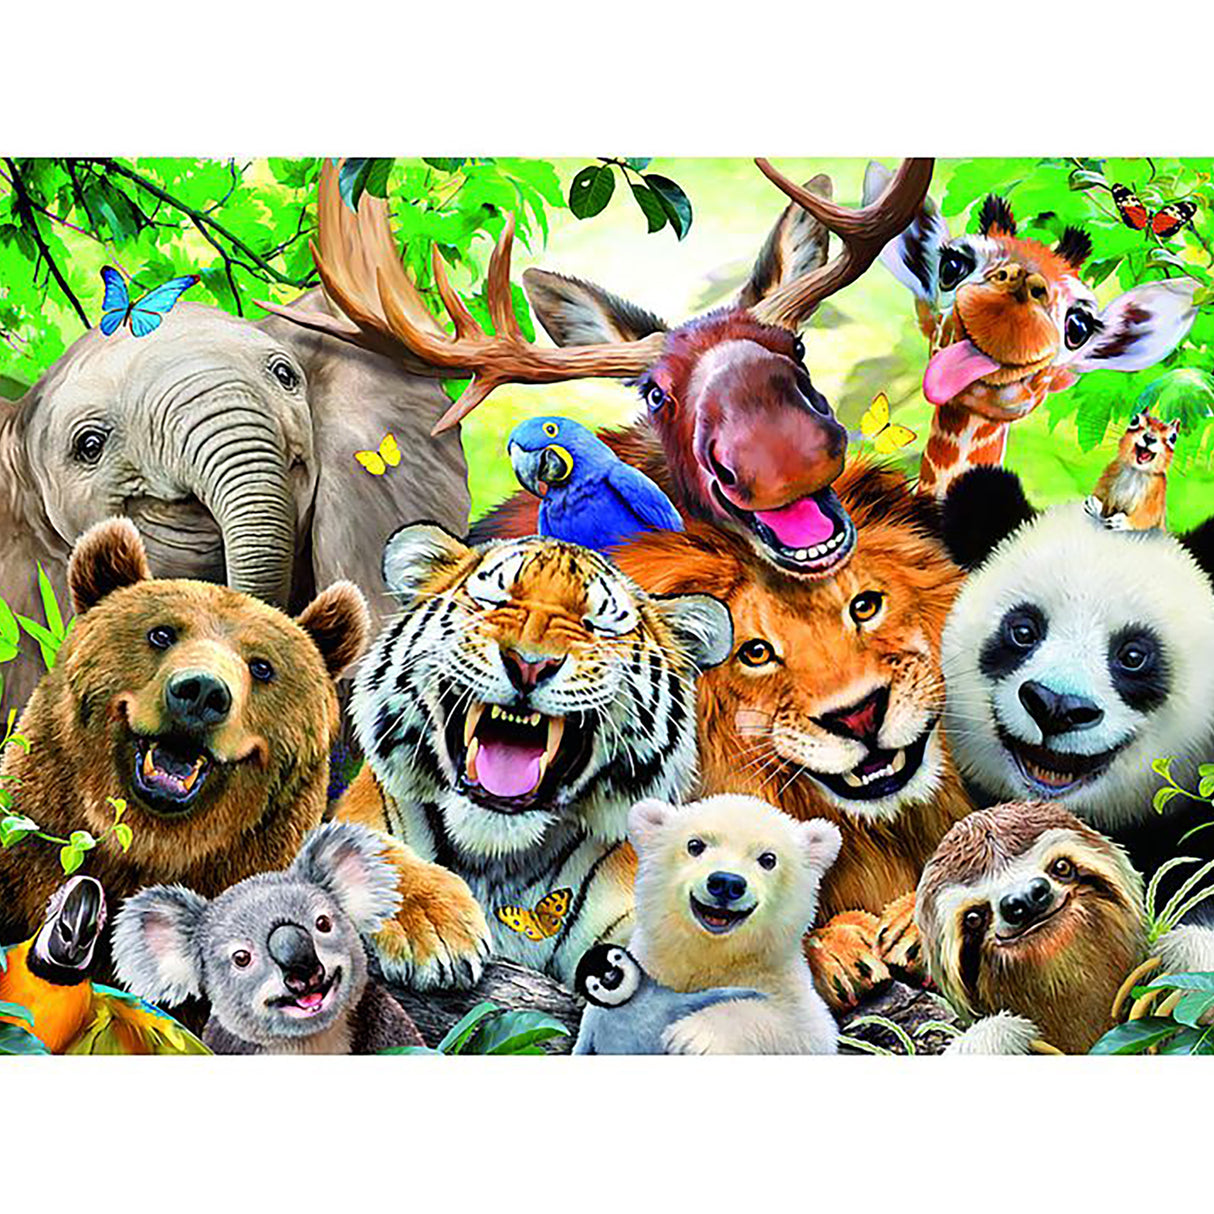 Ravensburger Wild Animal Selfie Puzzle (300 pieces)